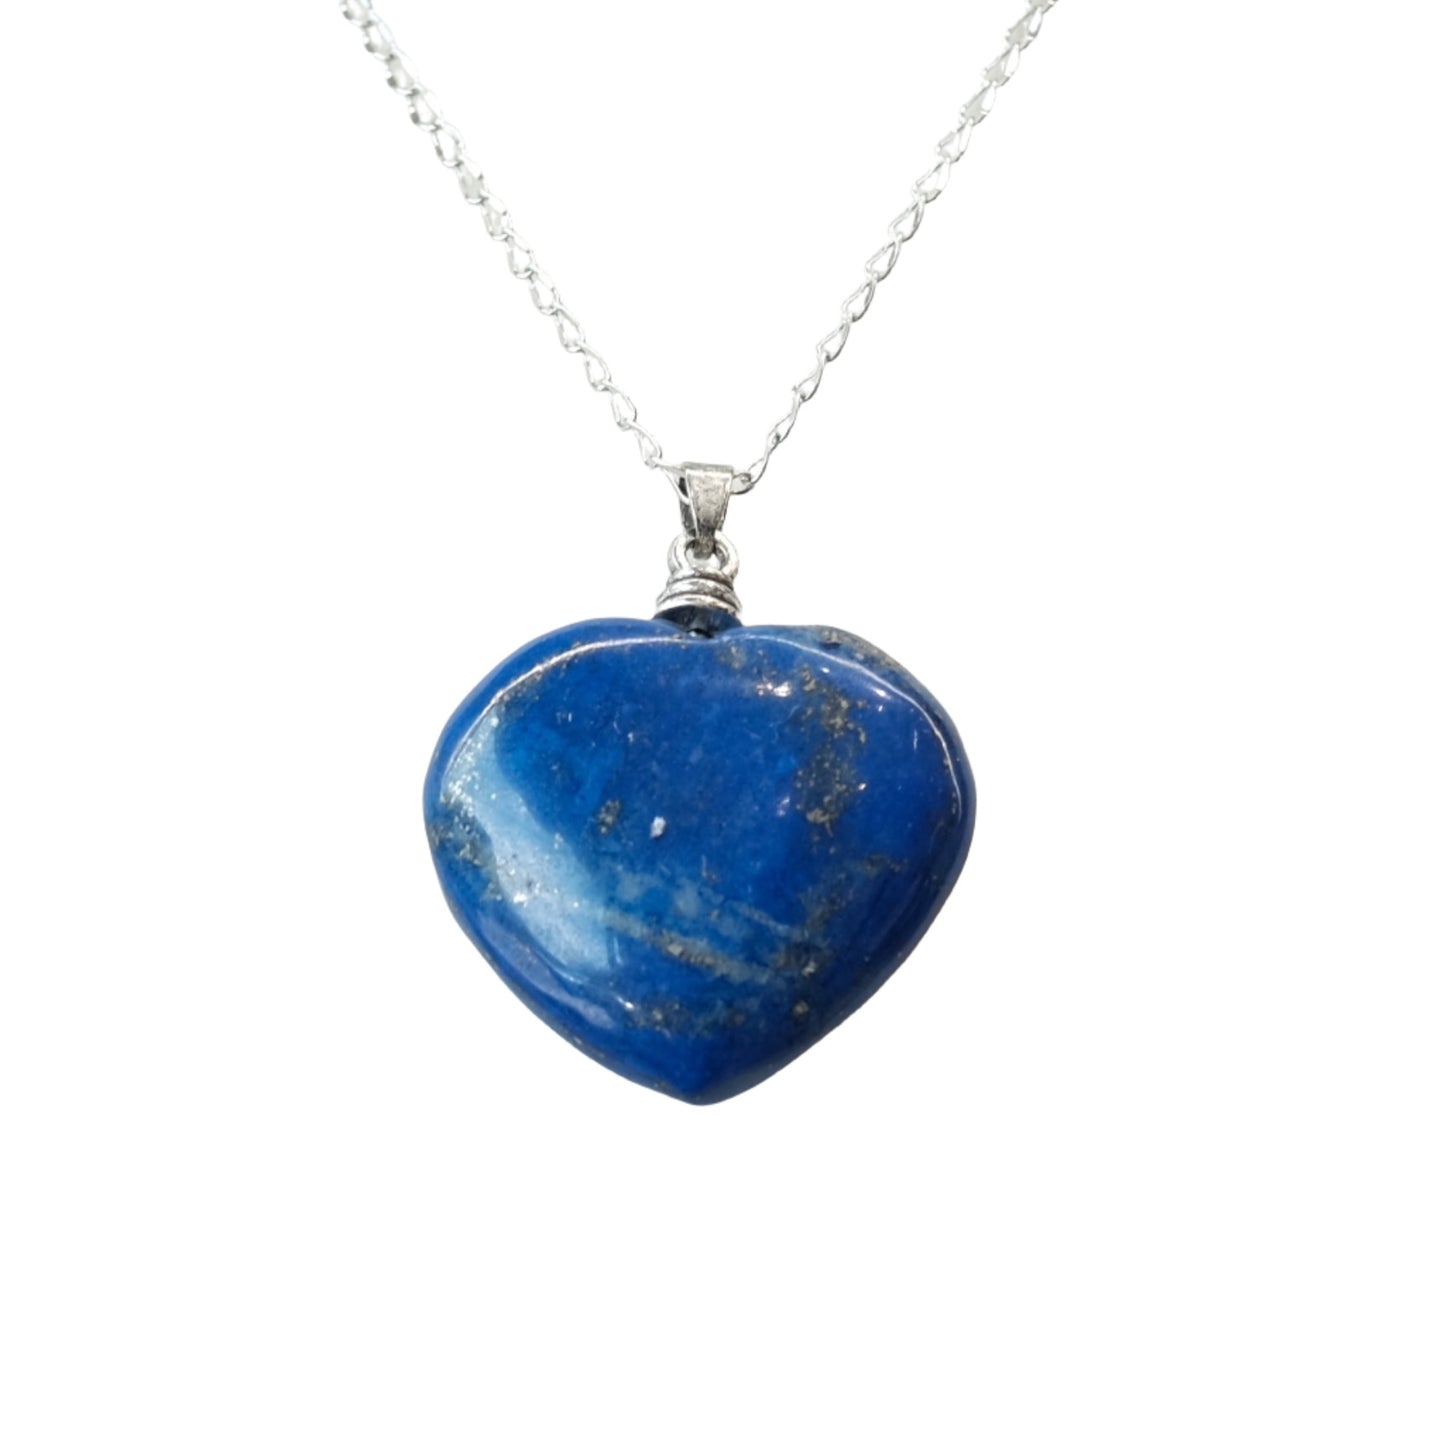 Lapis Lazuli Heart Pendant on a Chain Necklace